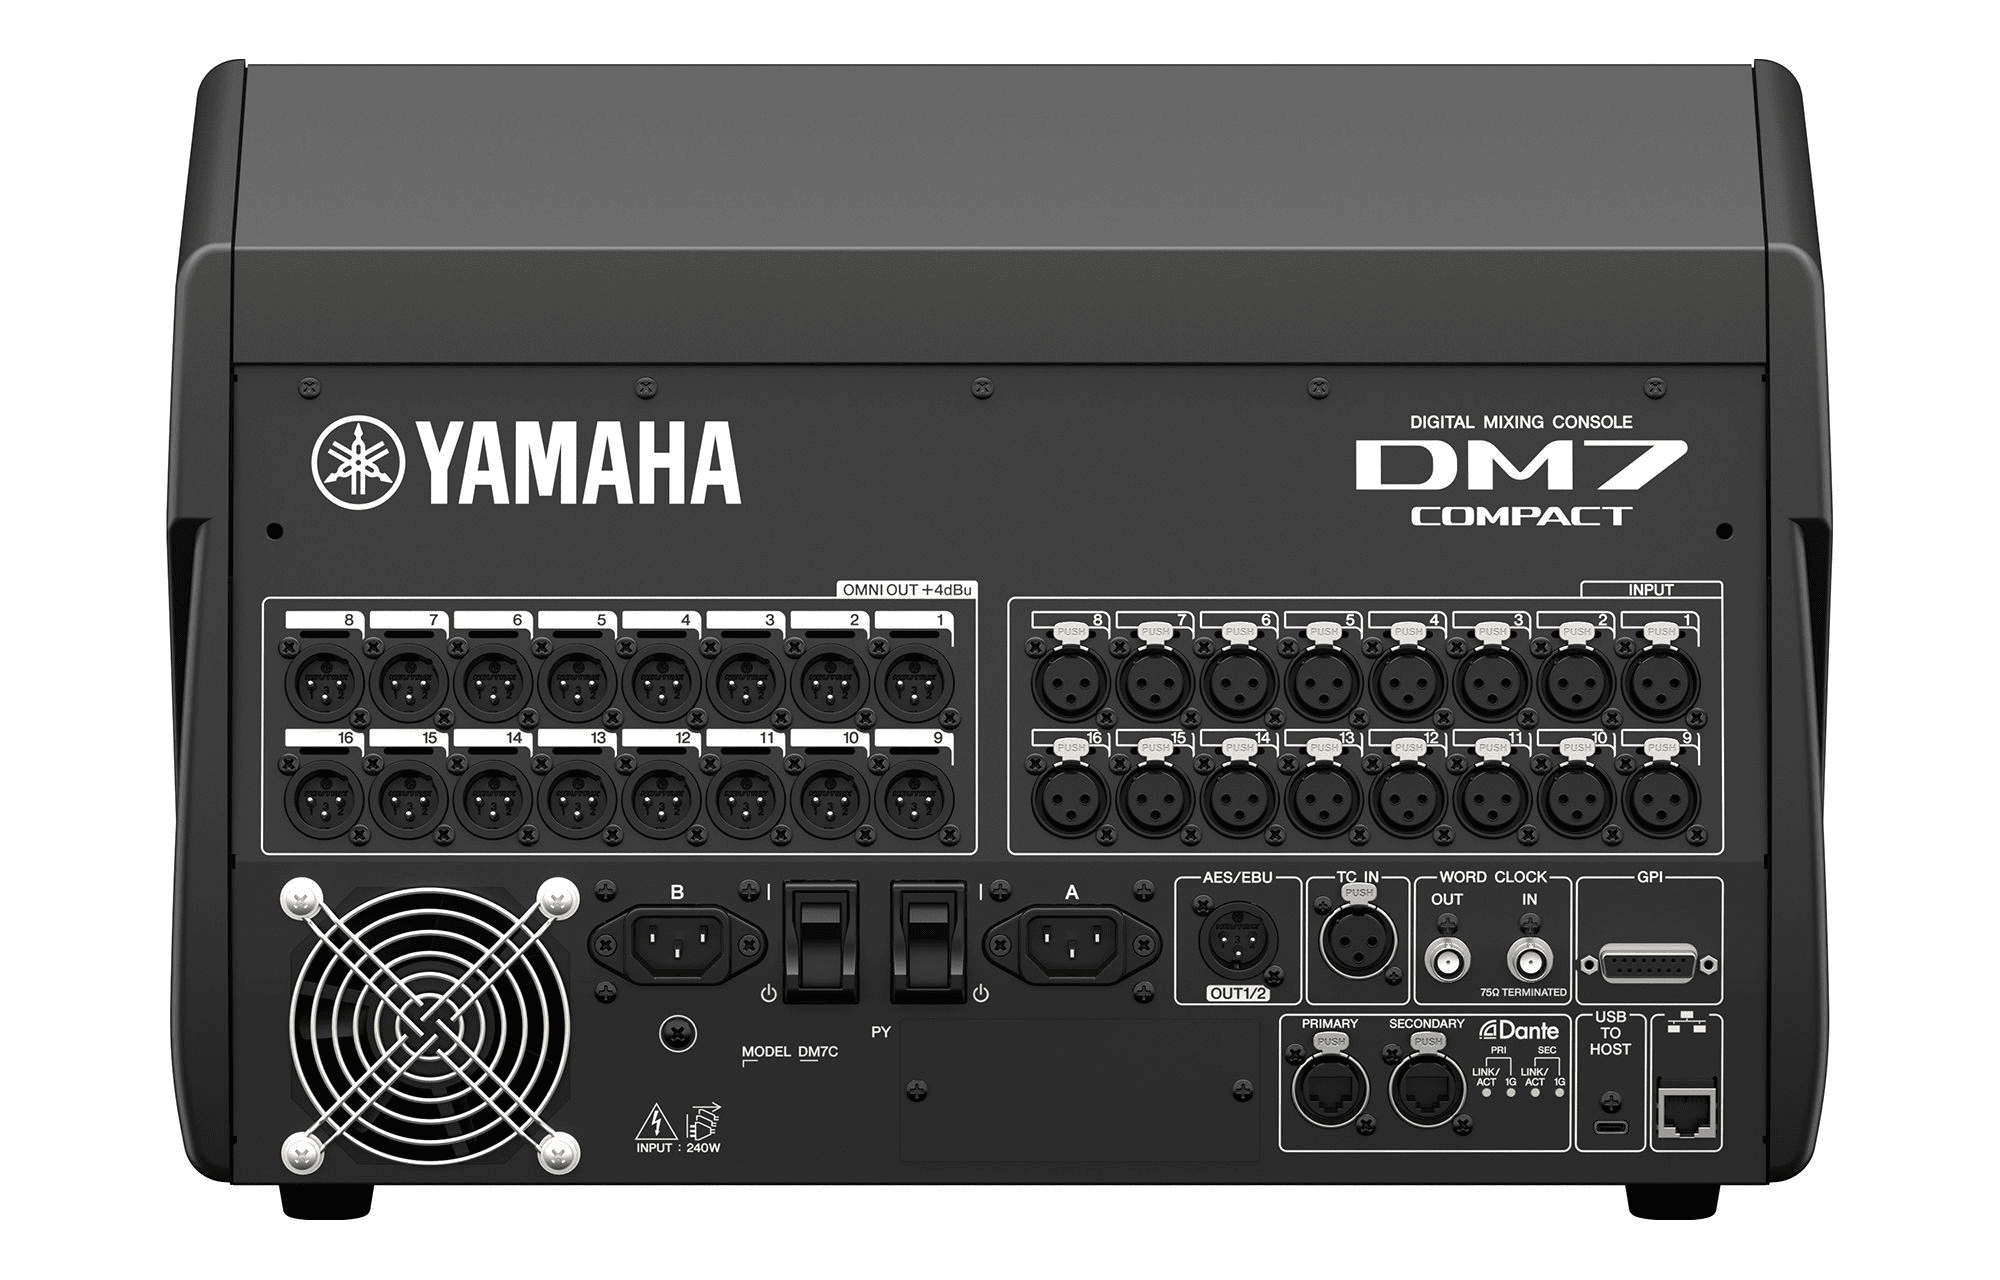 YAMAHA DM7 Compact